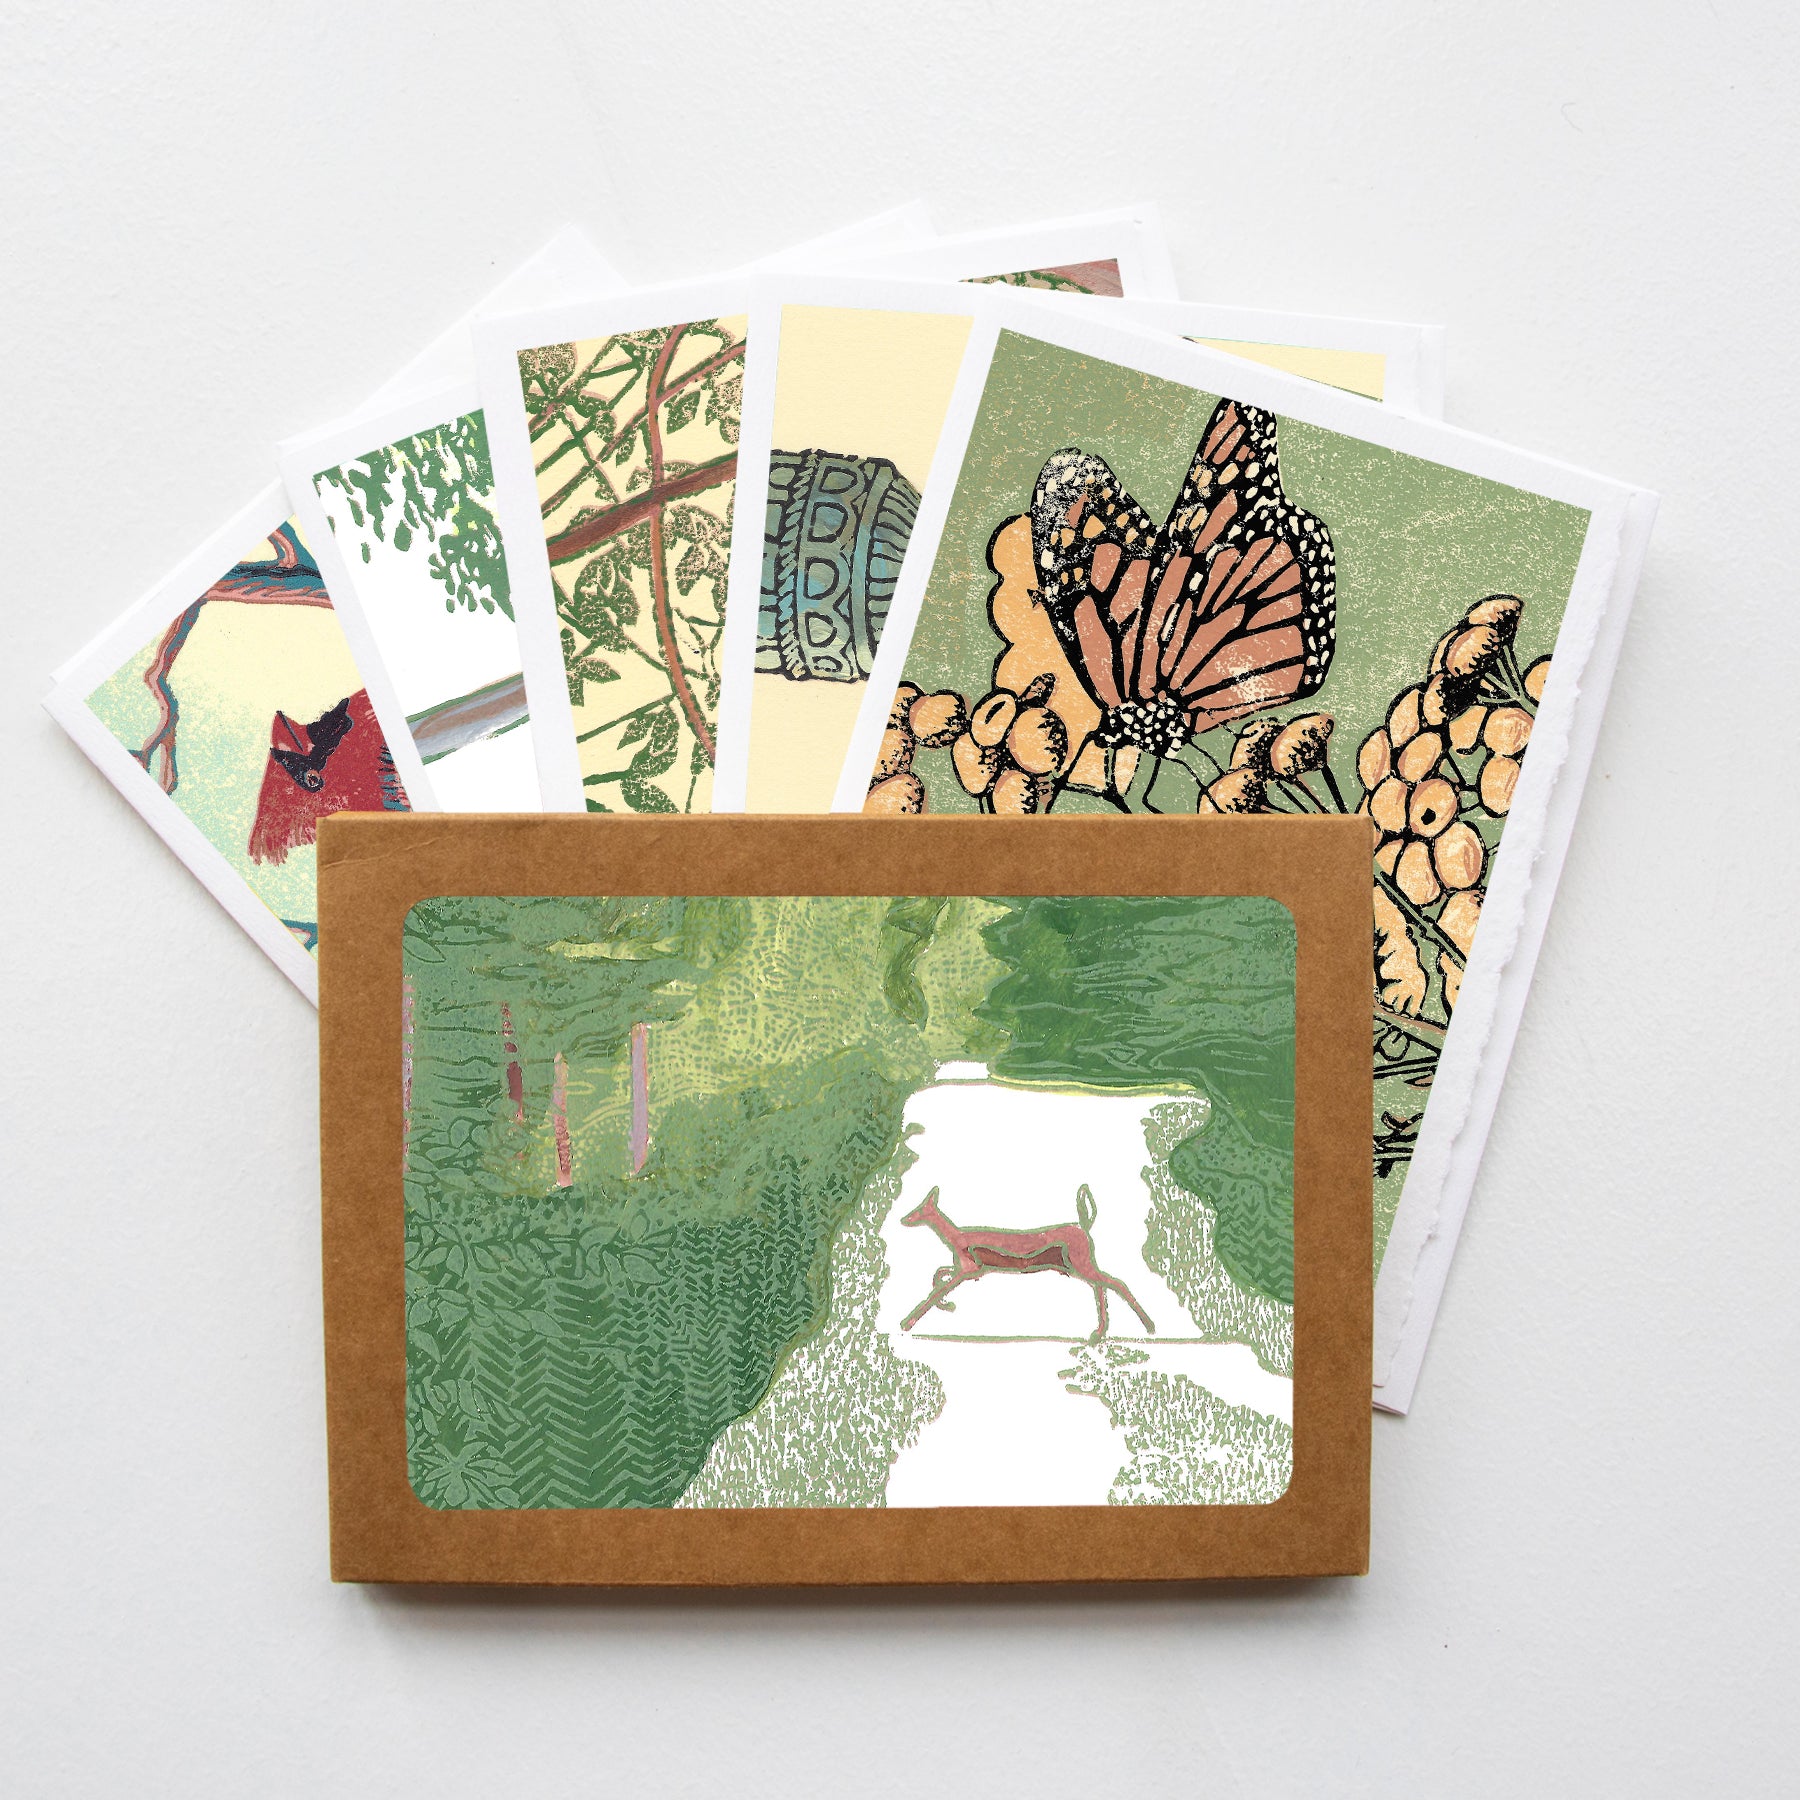 A casually elegant card set featuring Michigan wildlife art by Natalia Wohletz.